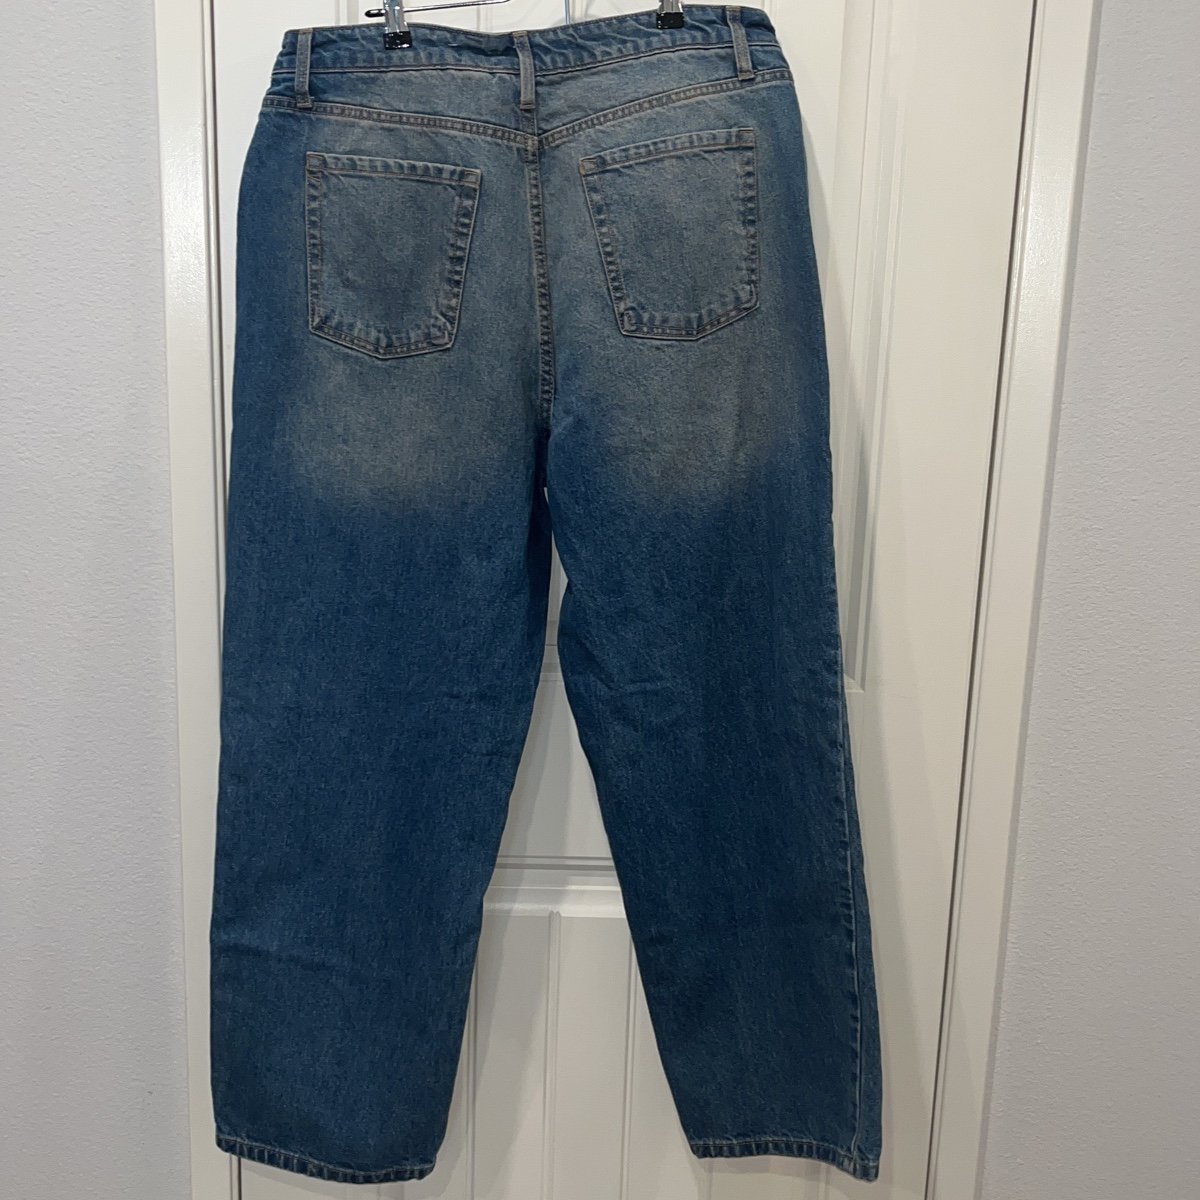 Wholesale price Wild Fable Jeans 16 oABMq5HgN Online Shop